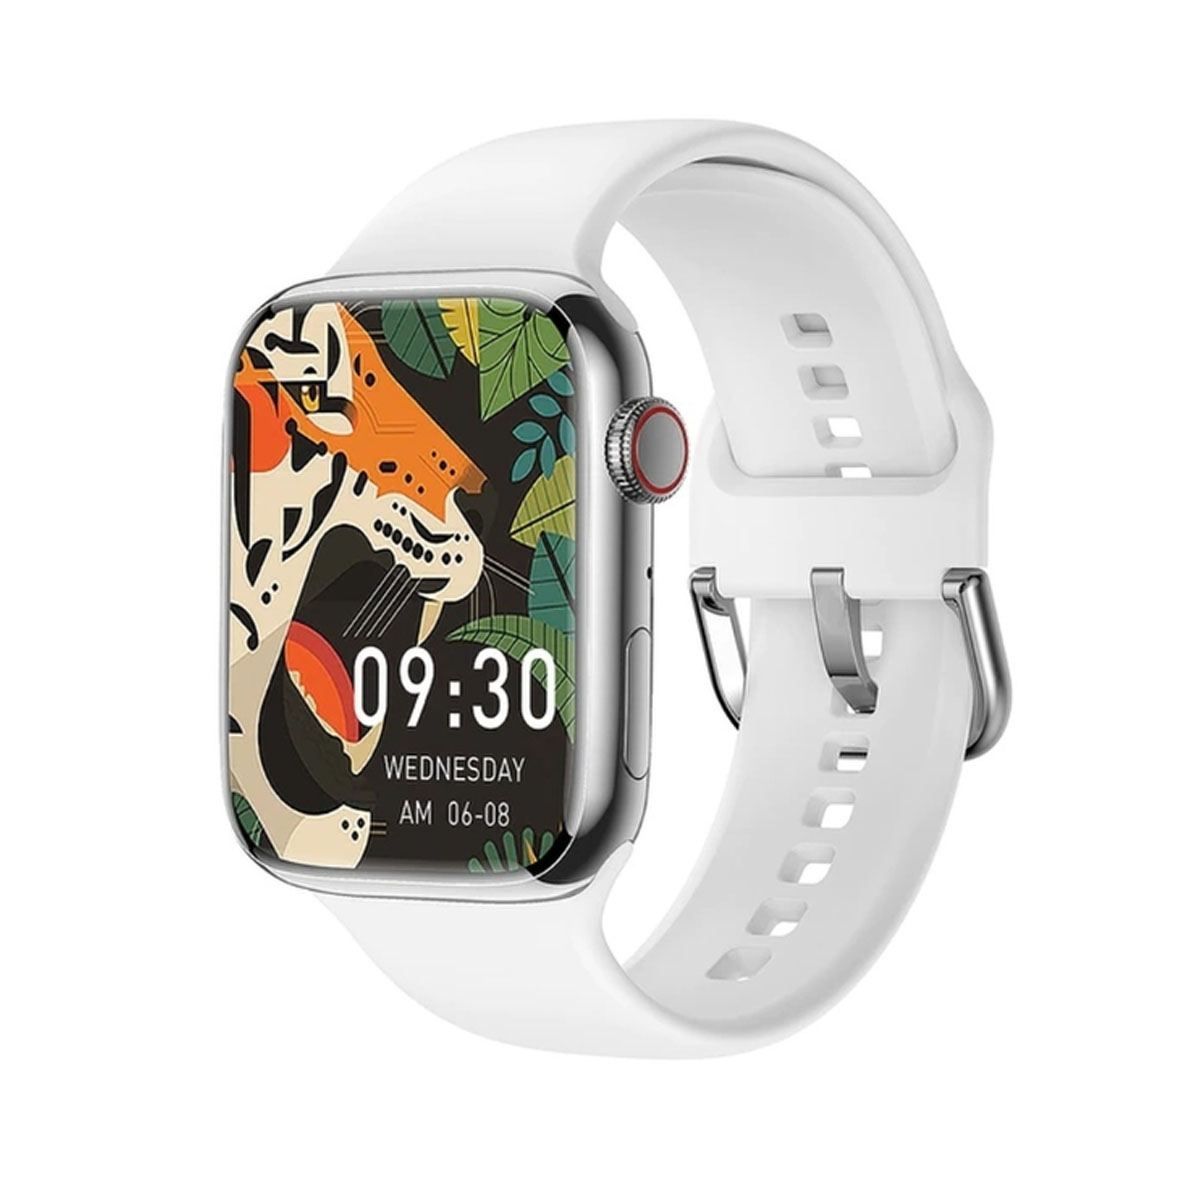 Смарт часы Smart Watch X7 Max, 45мм, цвет серебристый